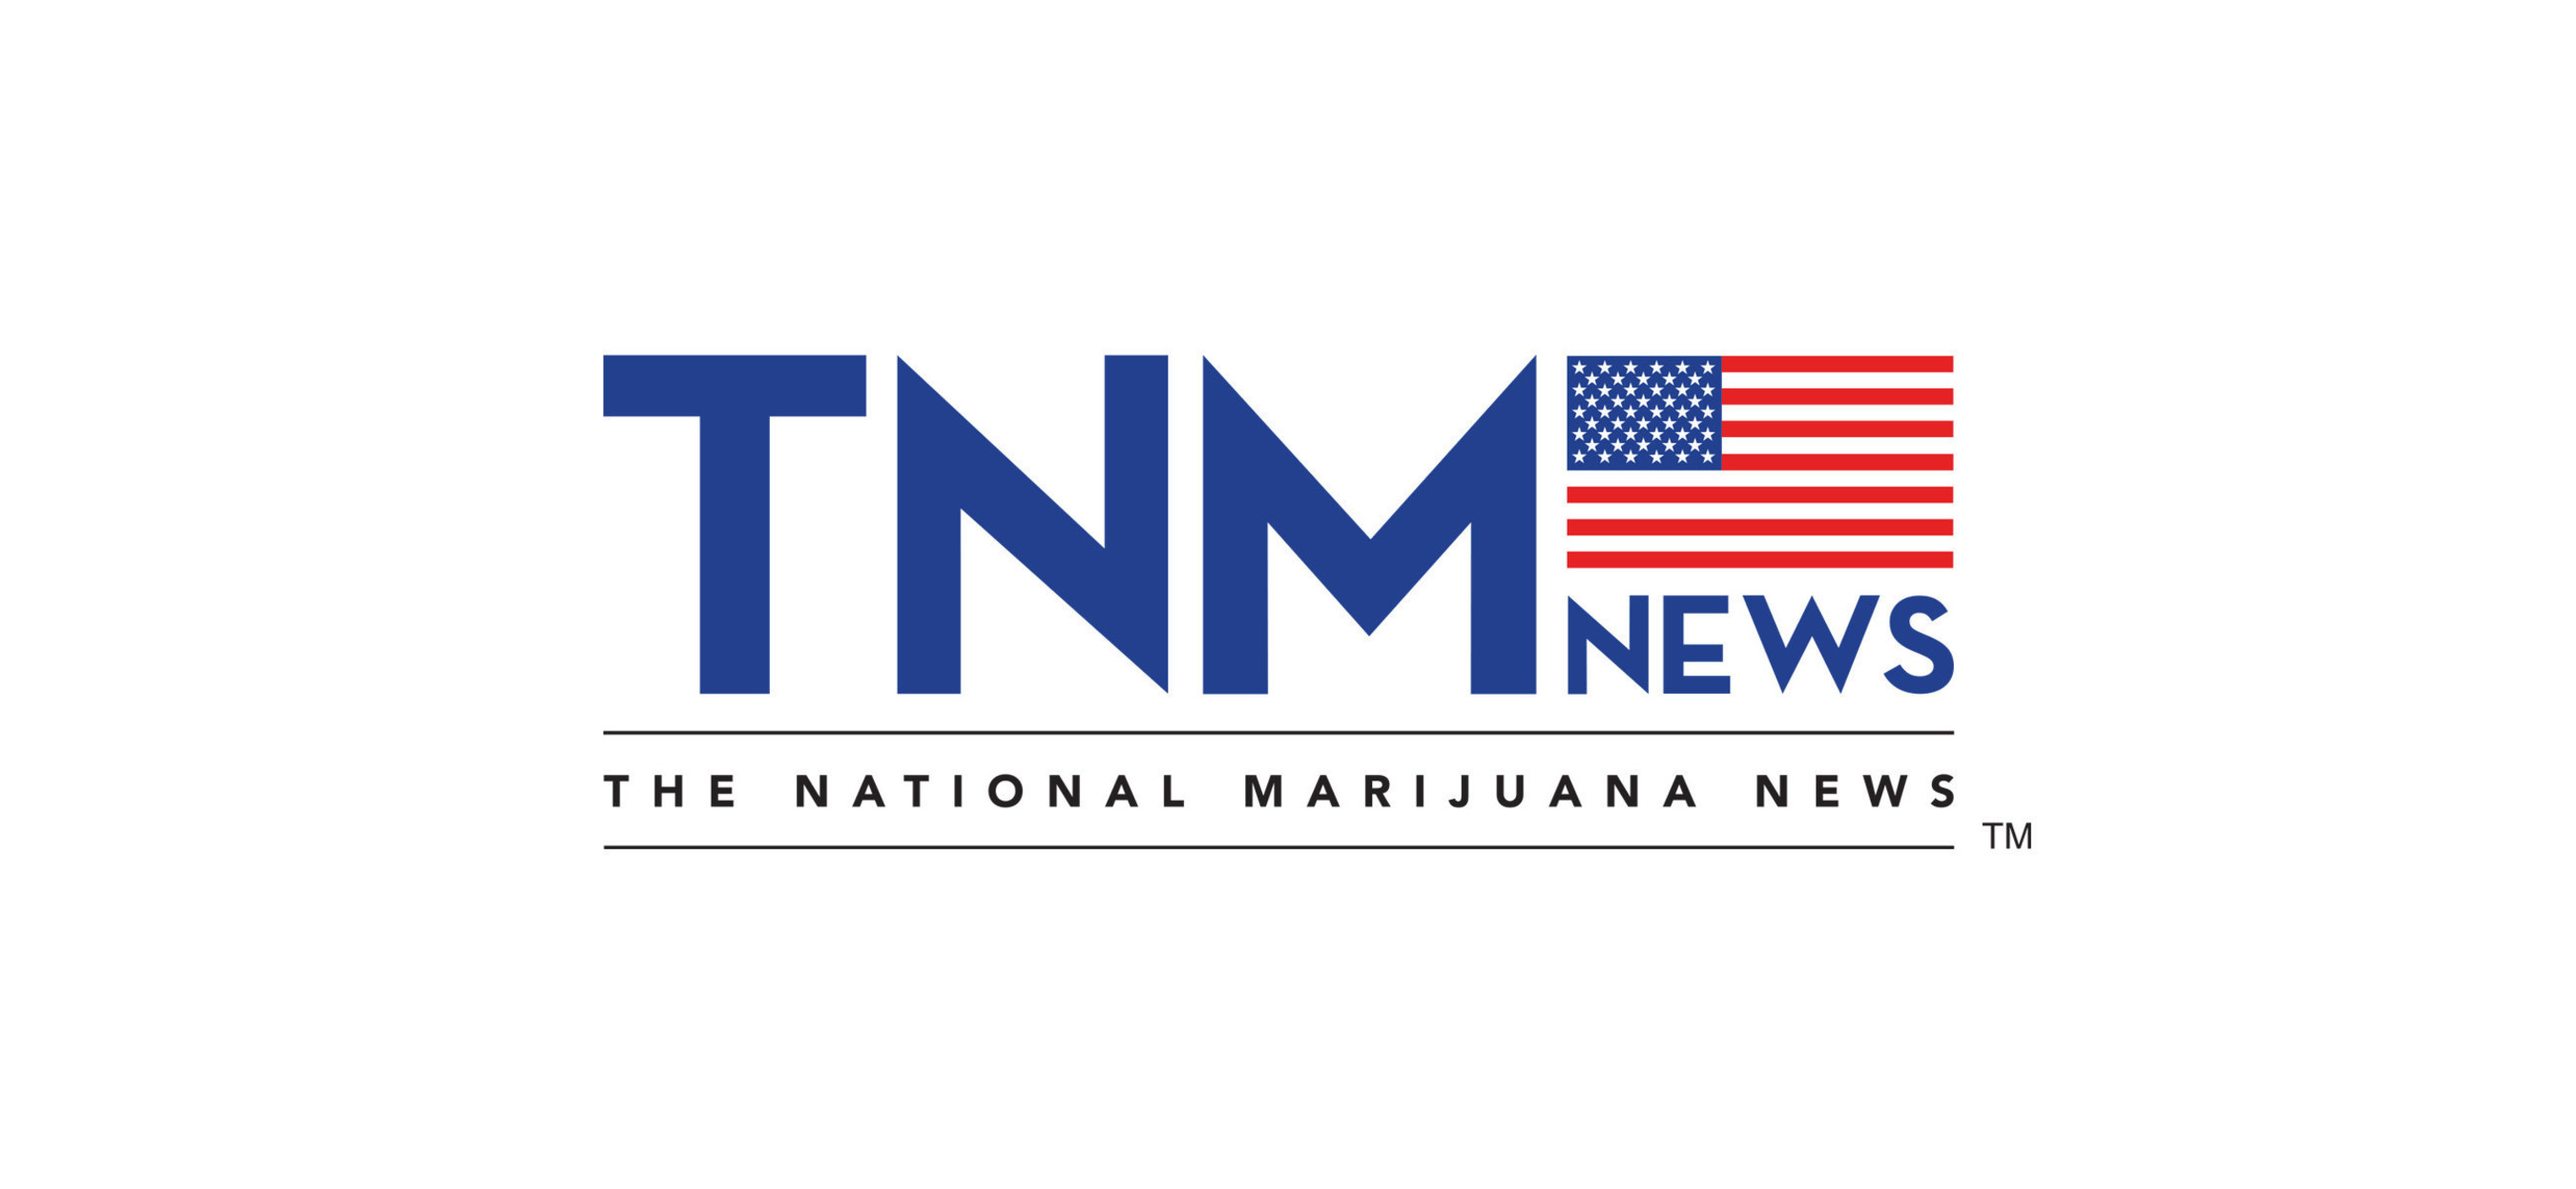 The National Marijuana News